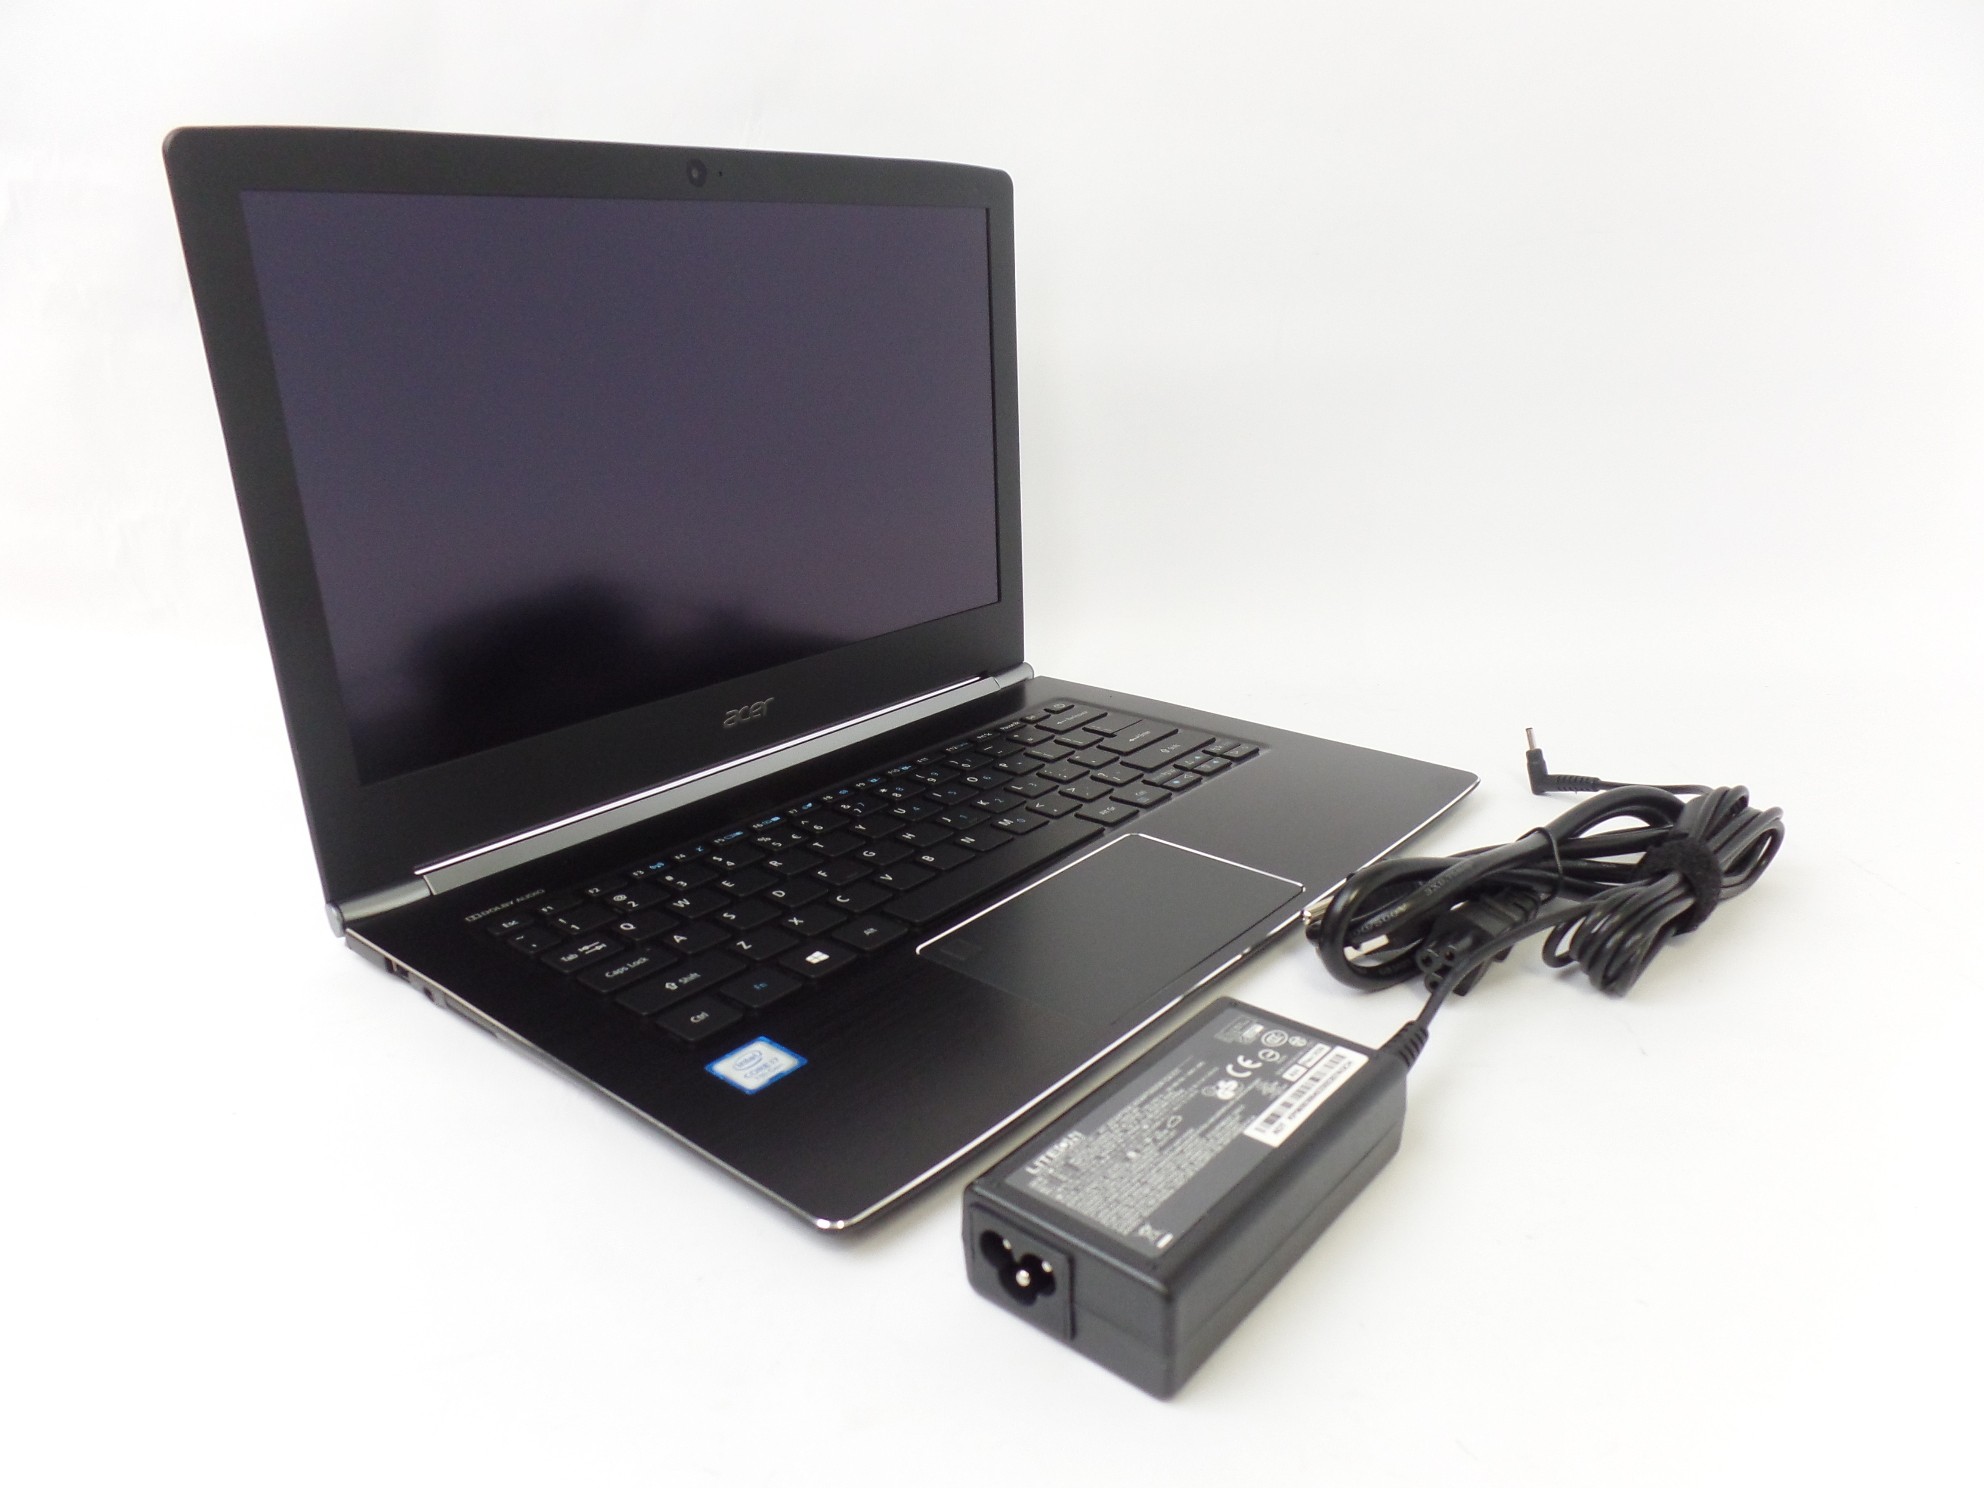 Acer Aspire S5-371T-78TA 13.3" FHD Touch i7-7500U 2.7GHz 8GB 256GB SSD W10H R